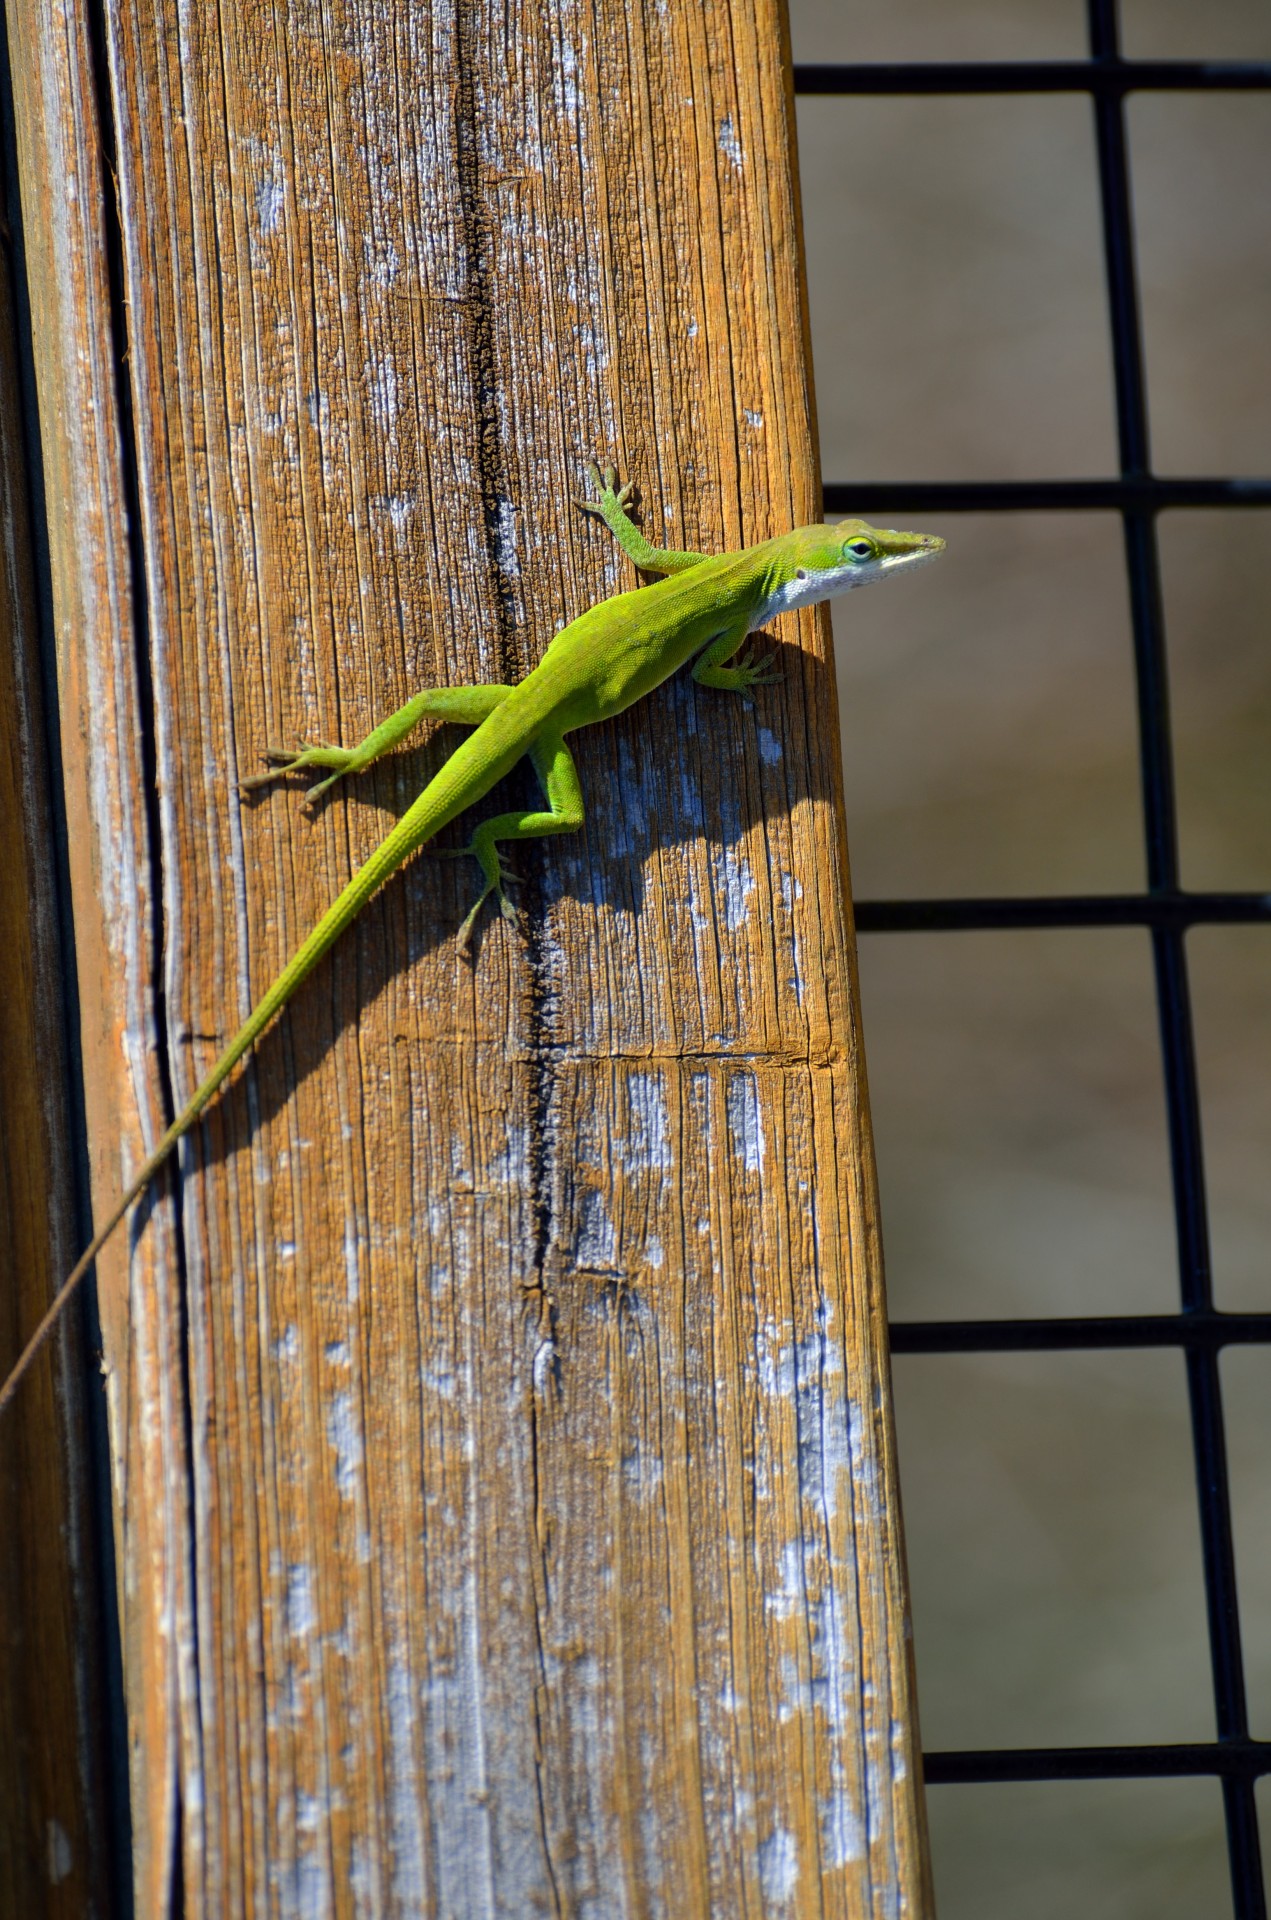 lizard green chameleon free photo